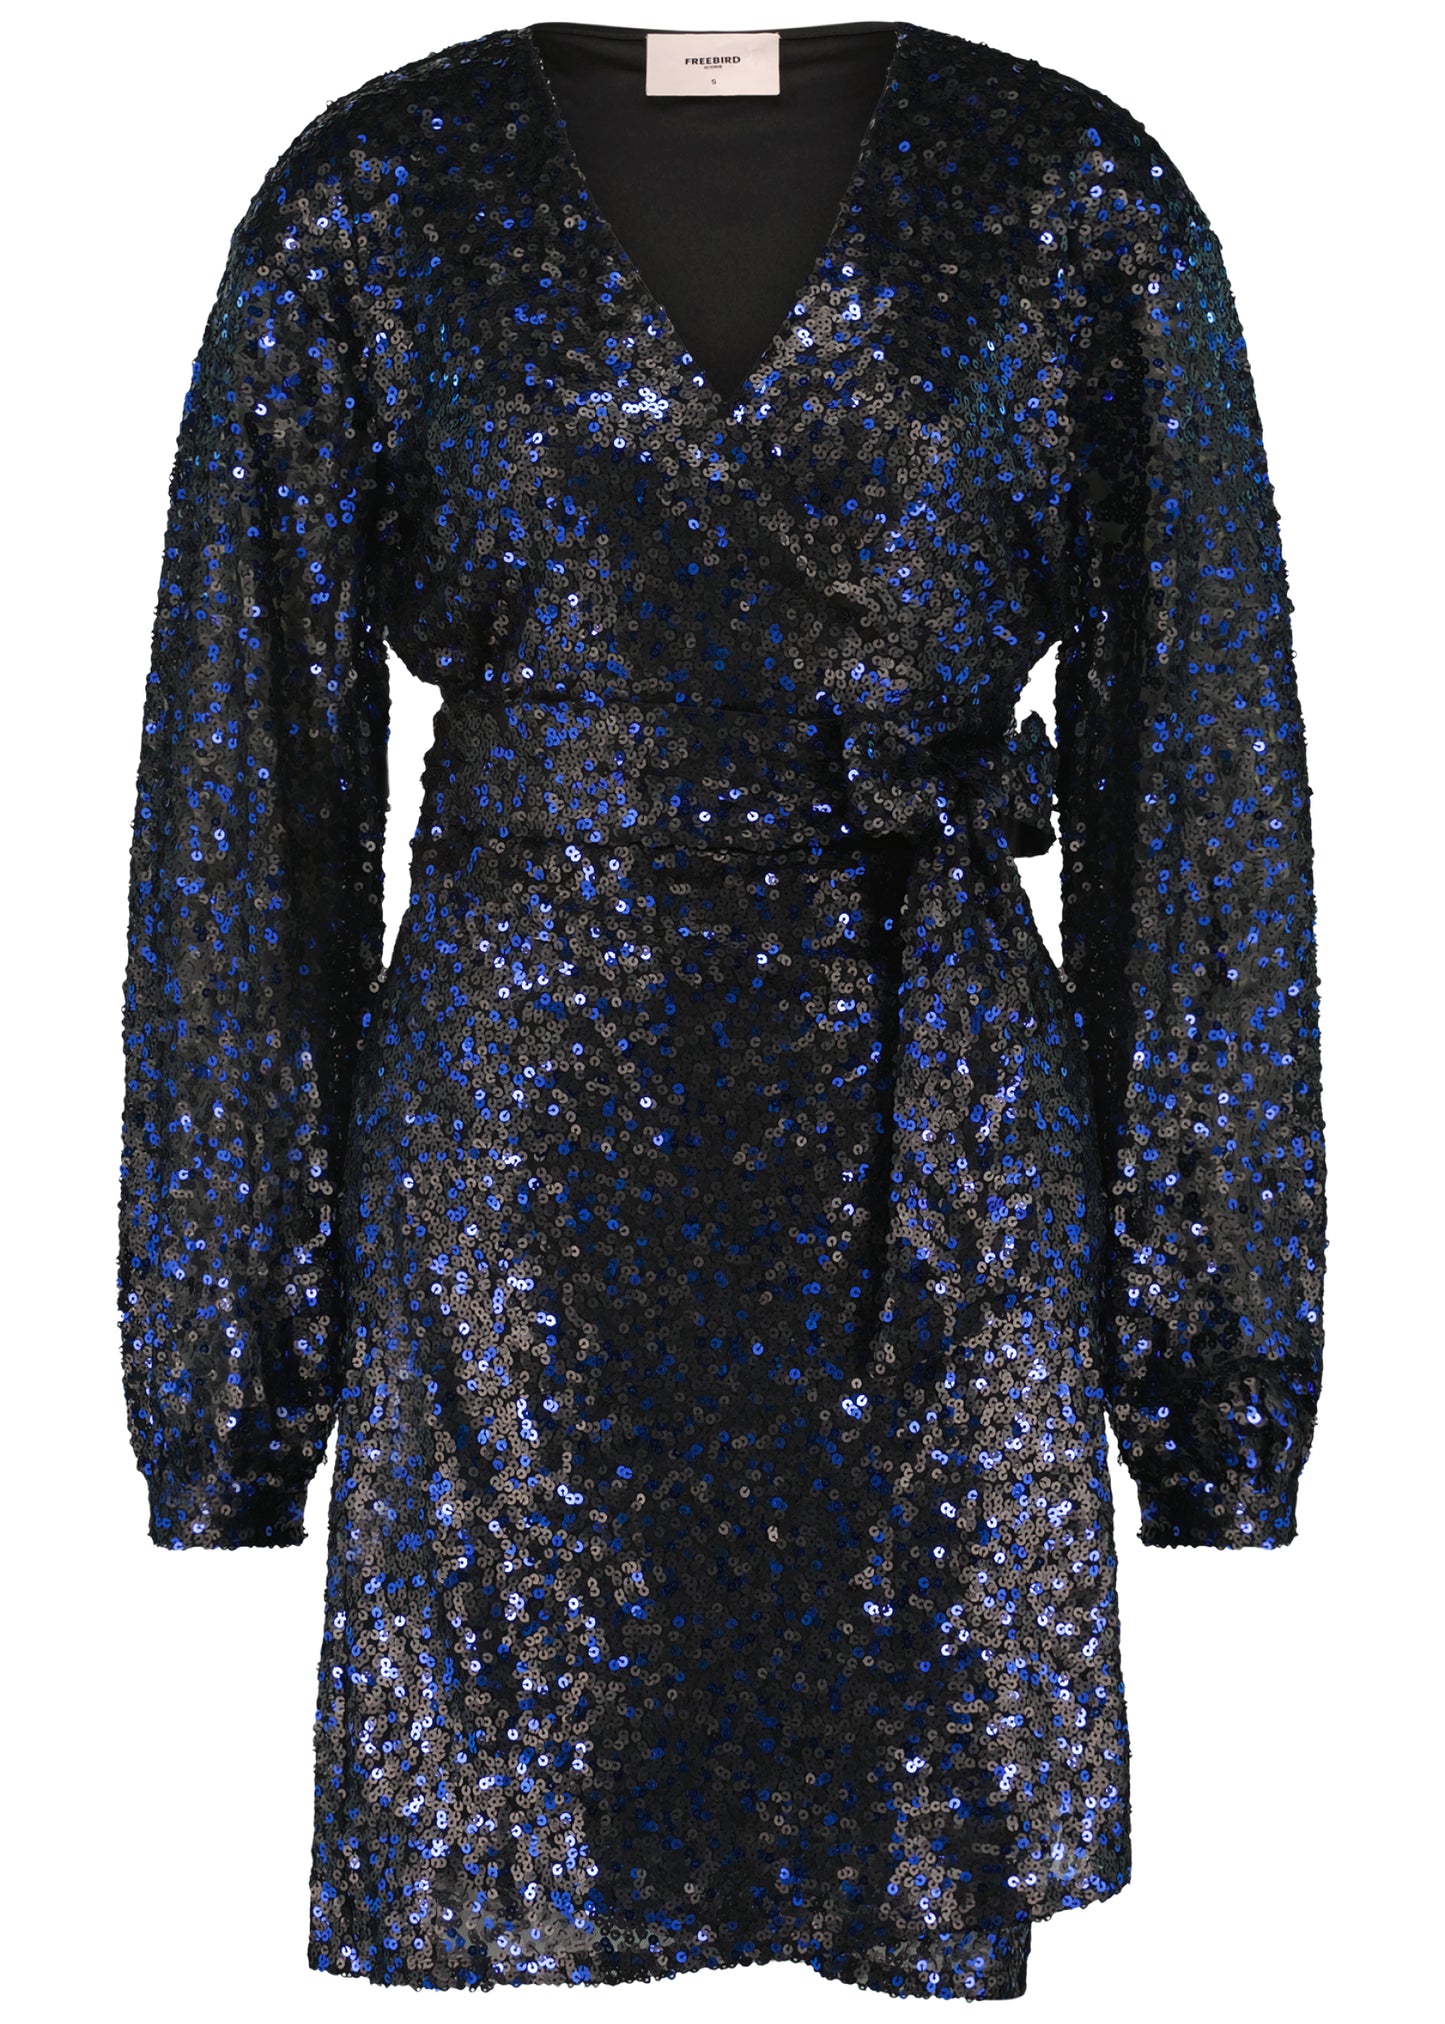 Dionne Dress Black/Blue